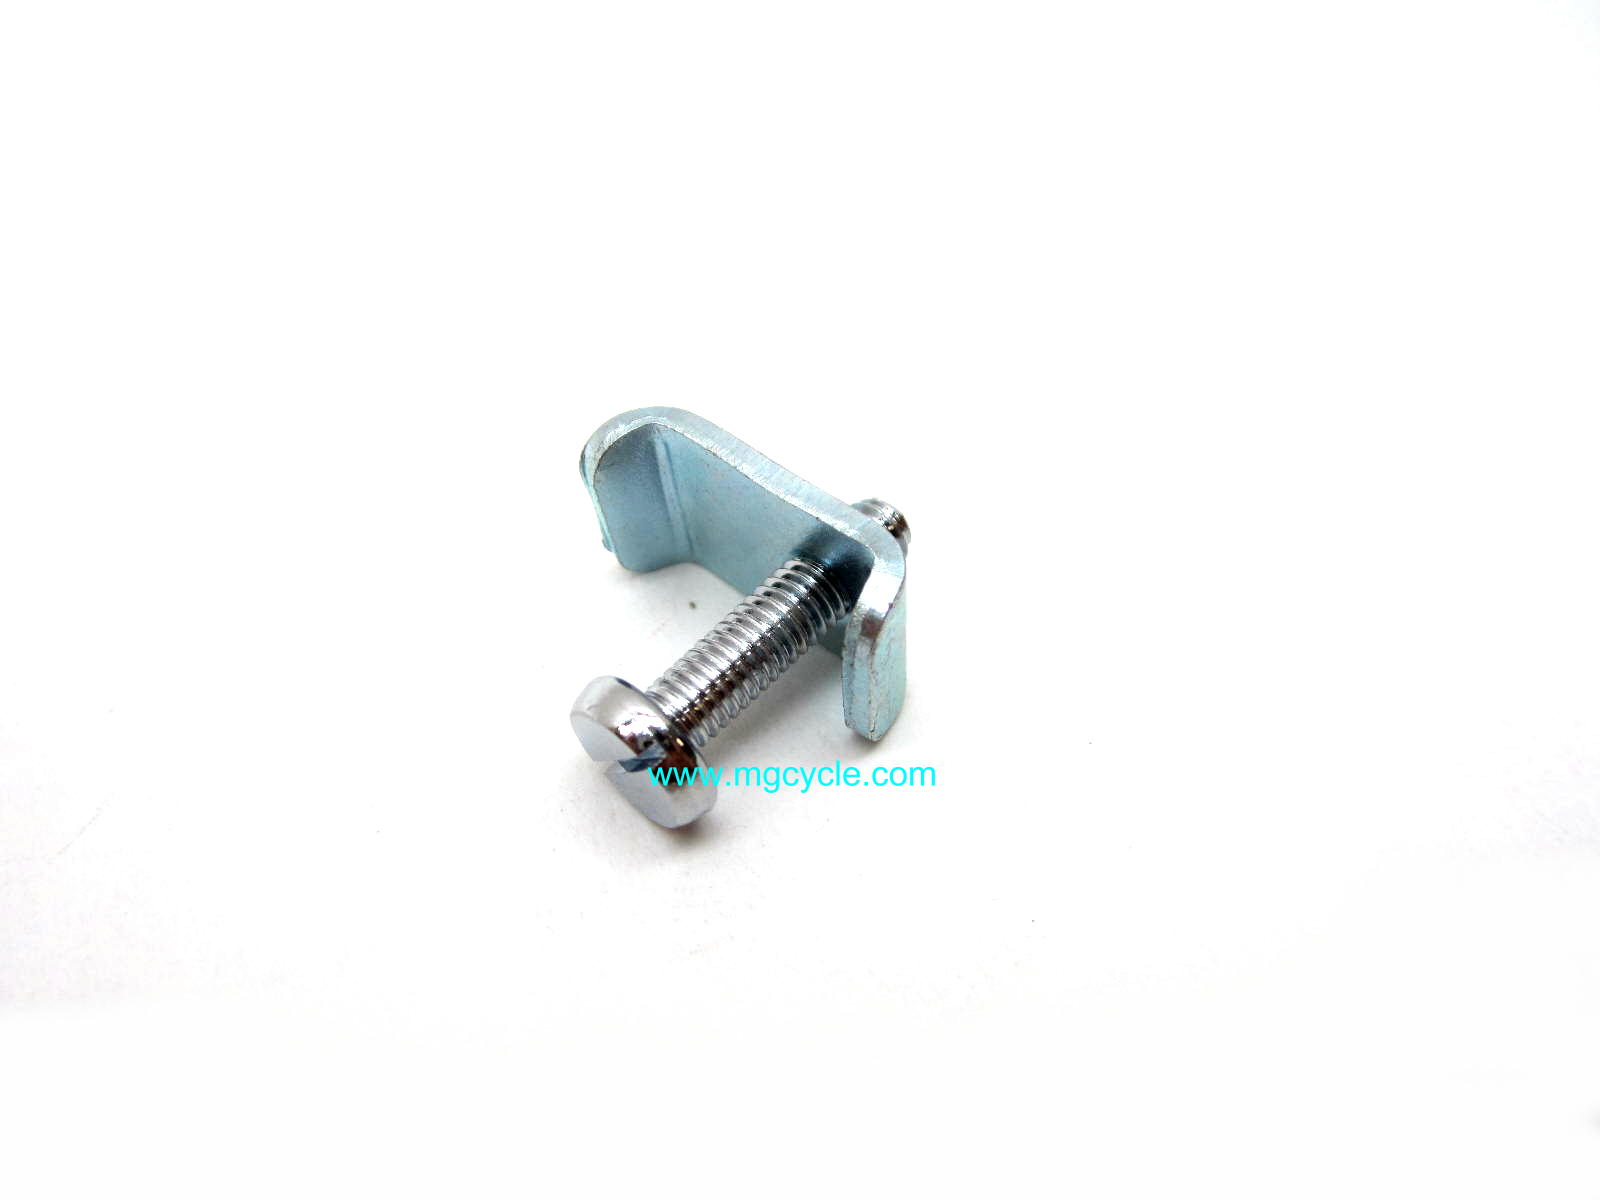 Headlight rim retainer screw and clip set for emgo headlight